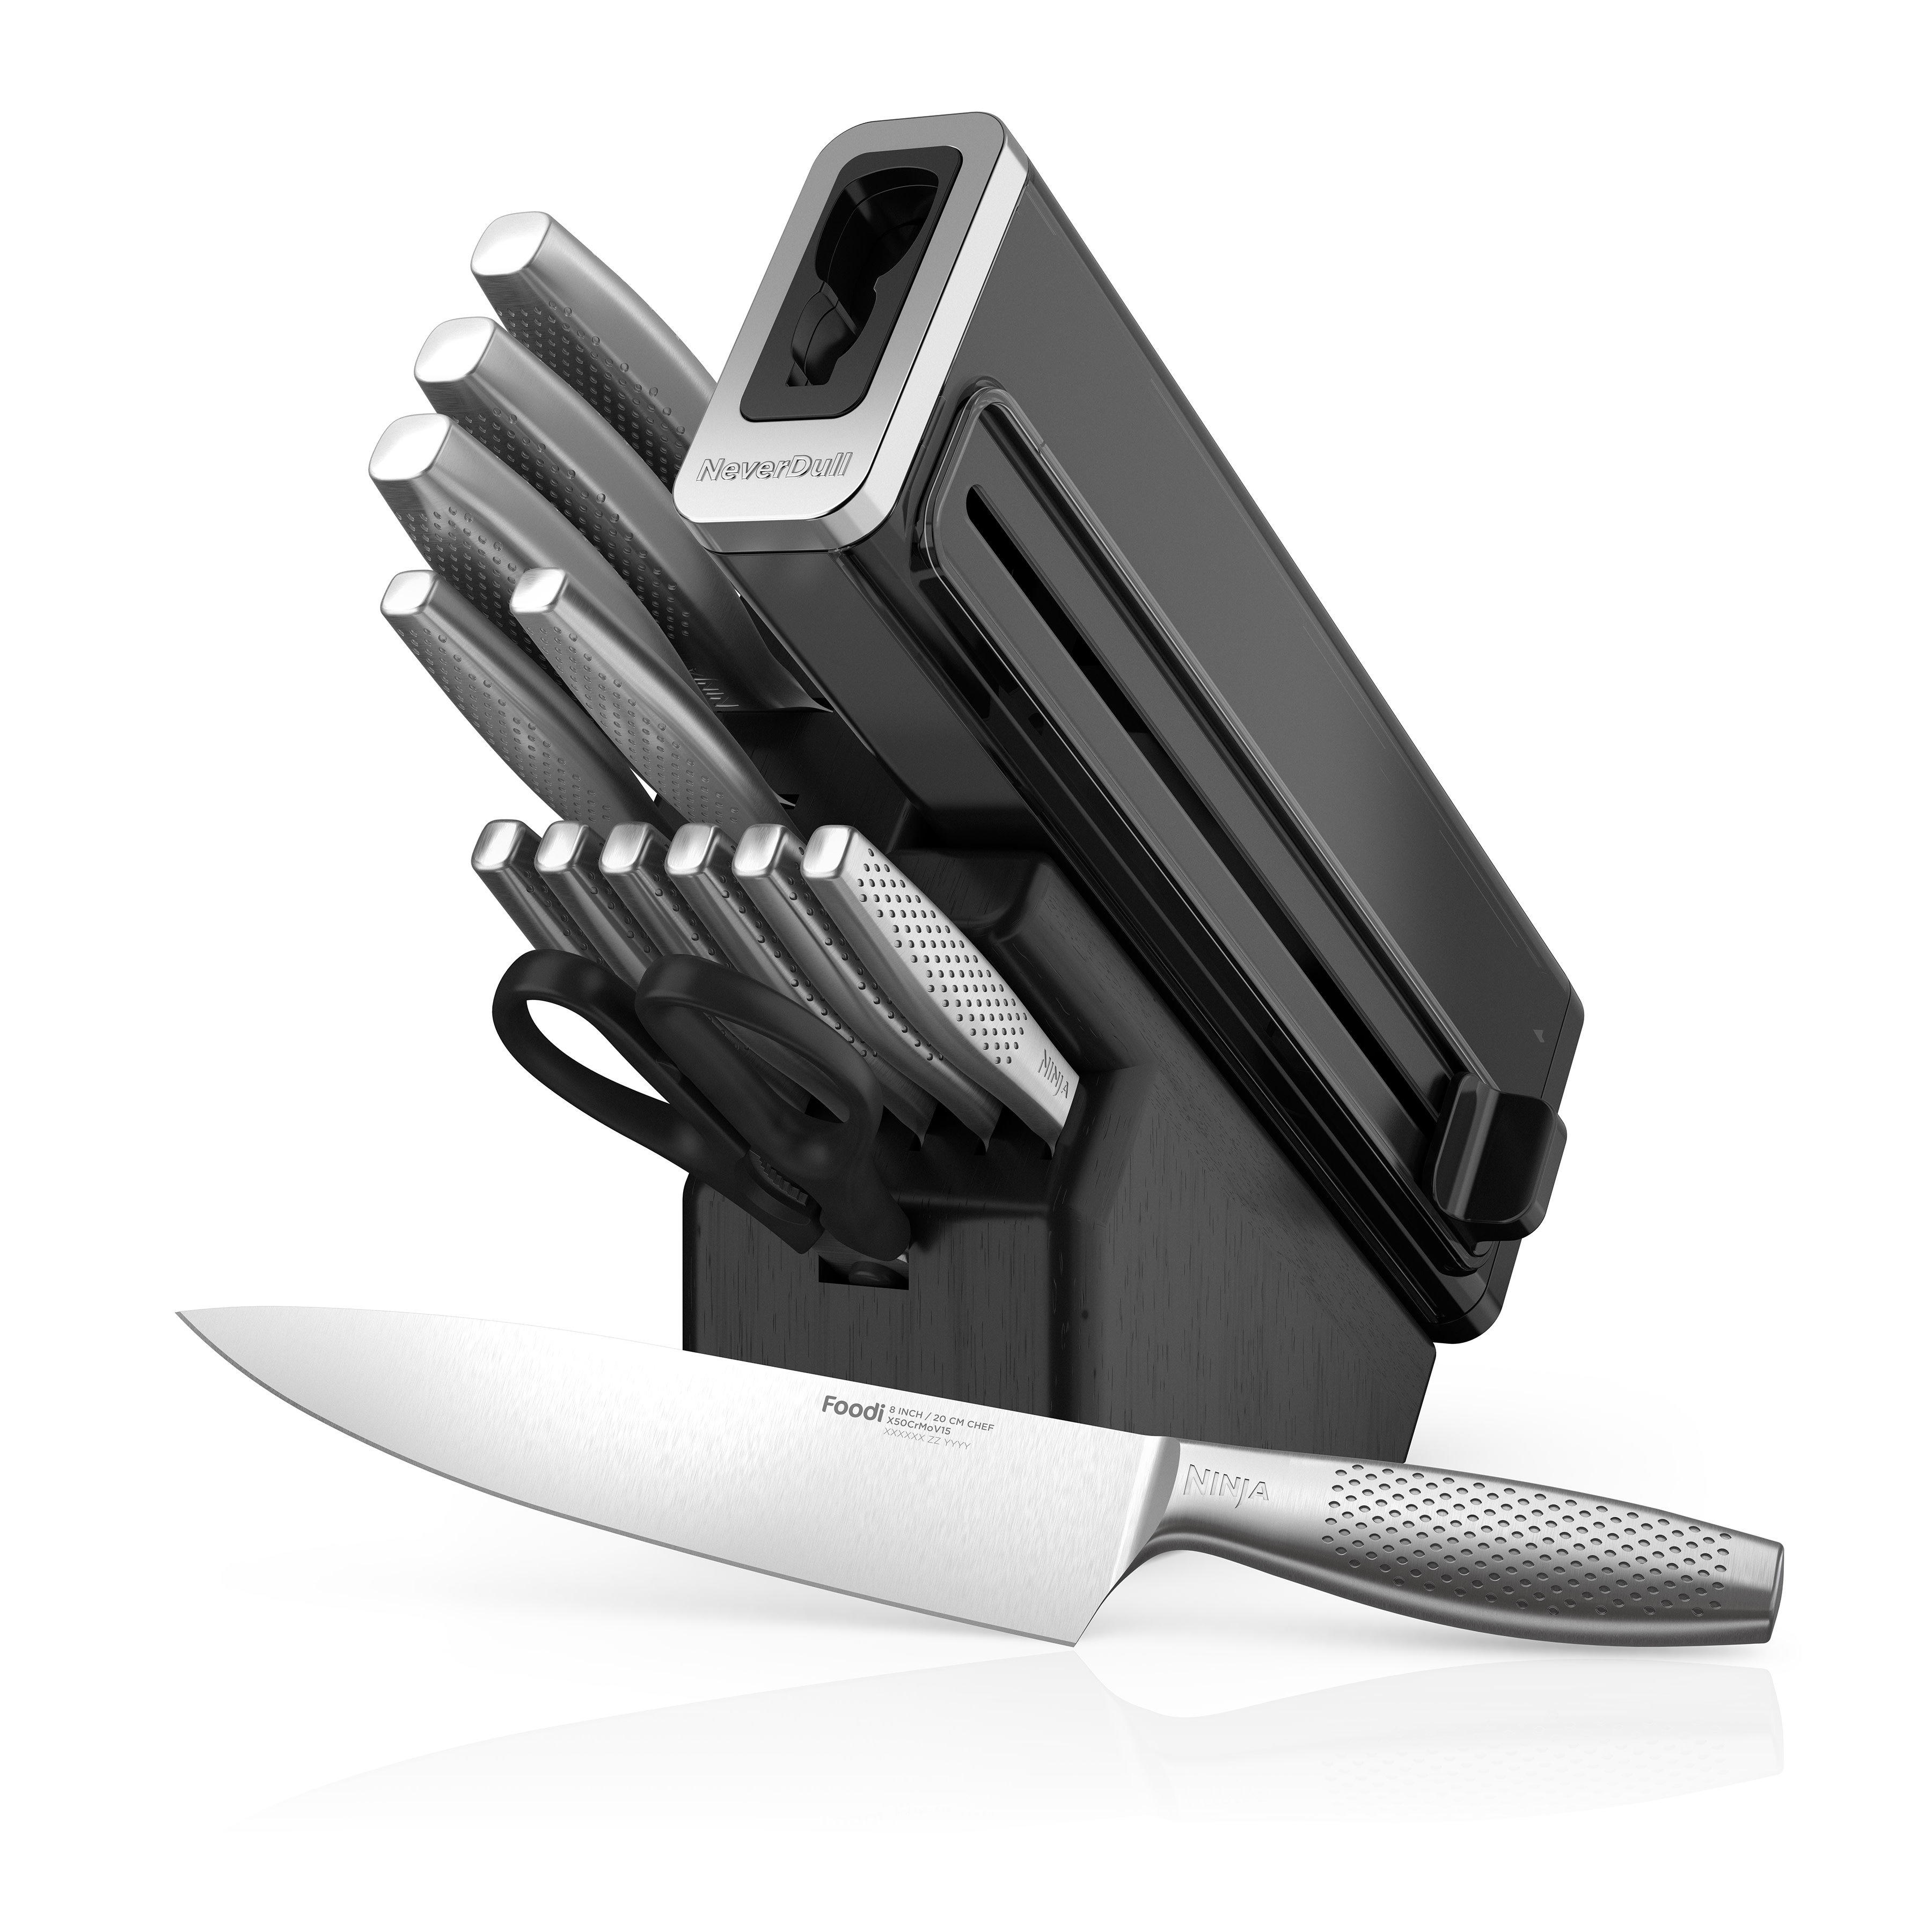  Calphalon Contemporary Self-Sharpening 14 Piece Cutlery Knife  Block Set with SharpIN Technology